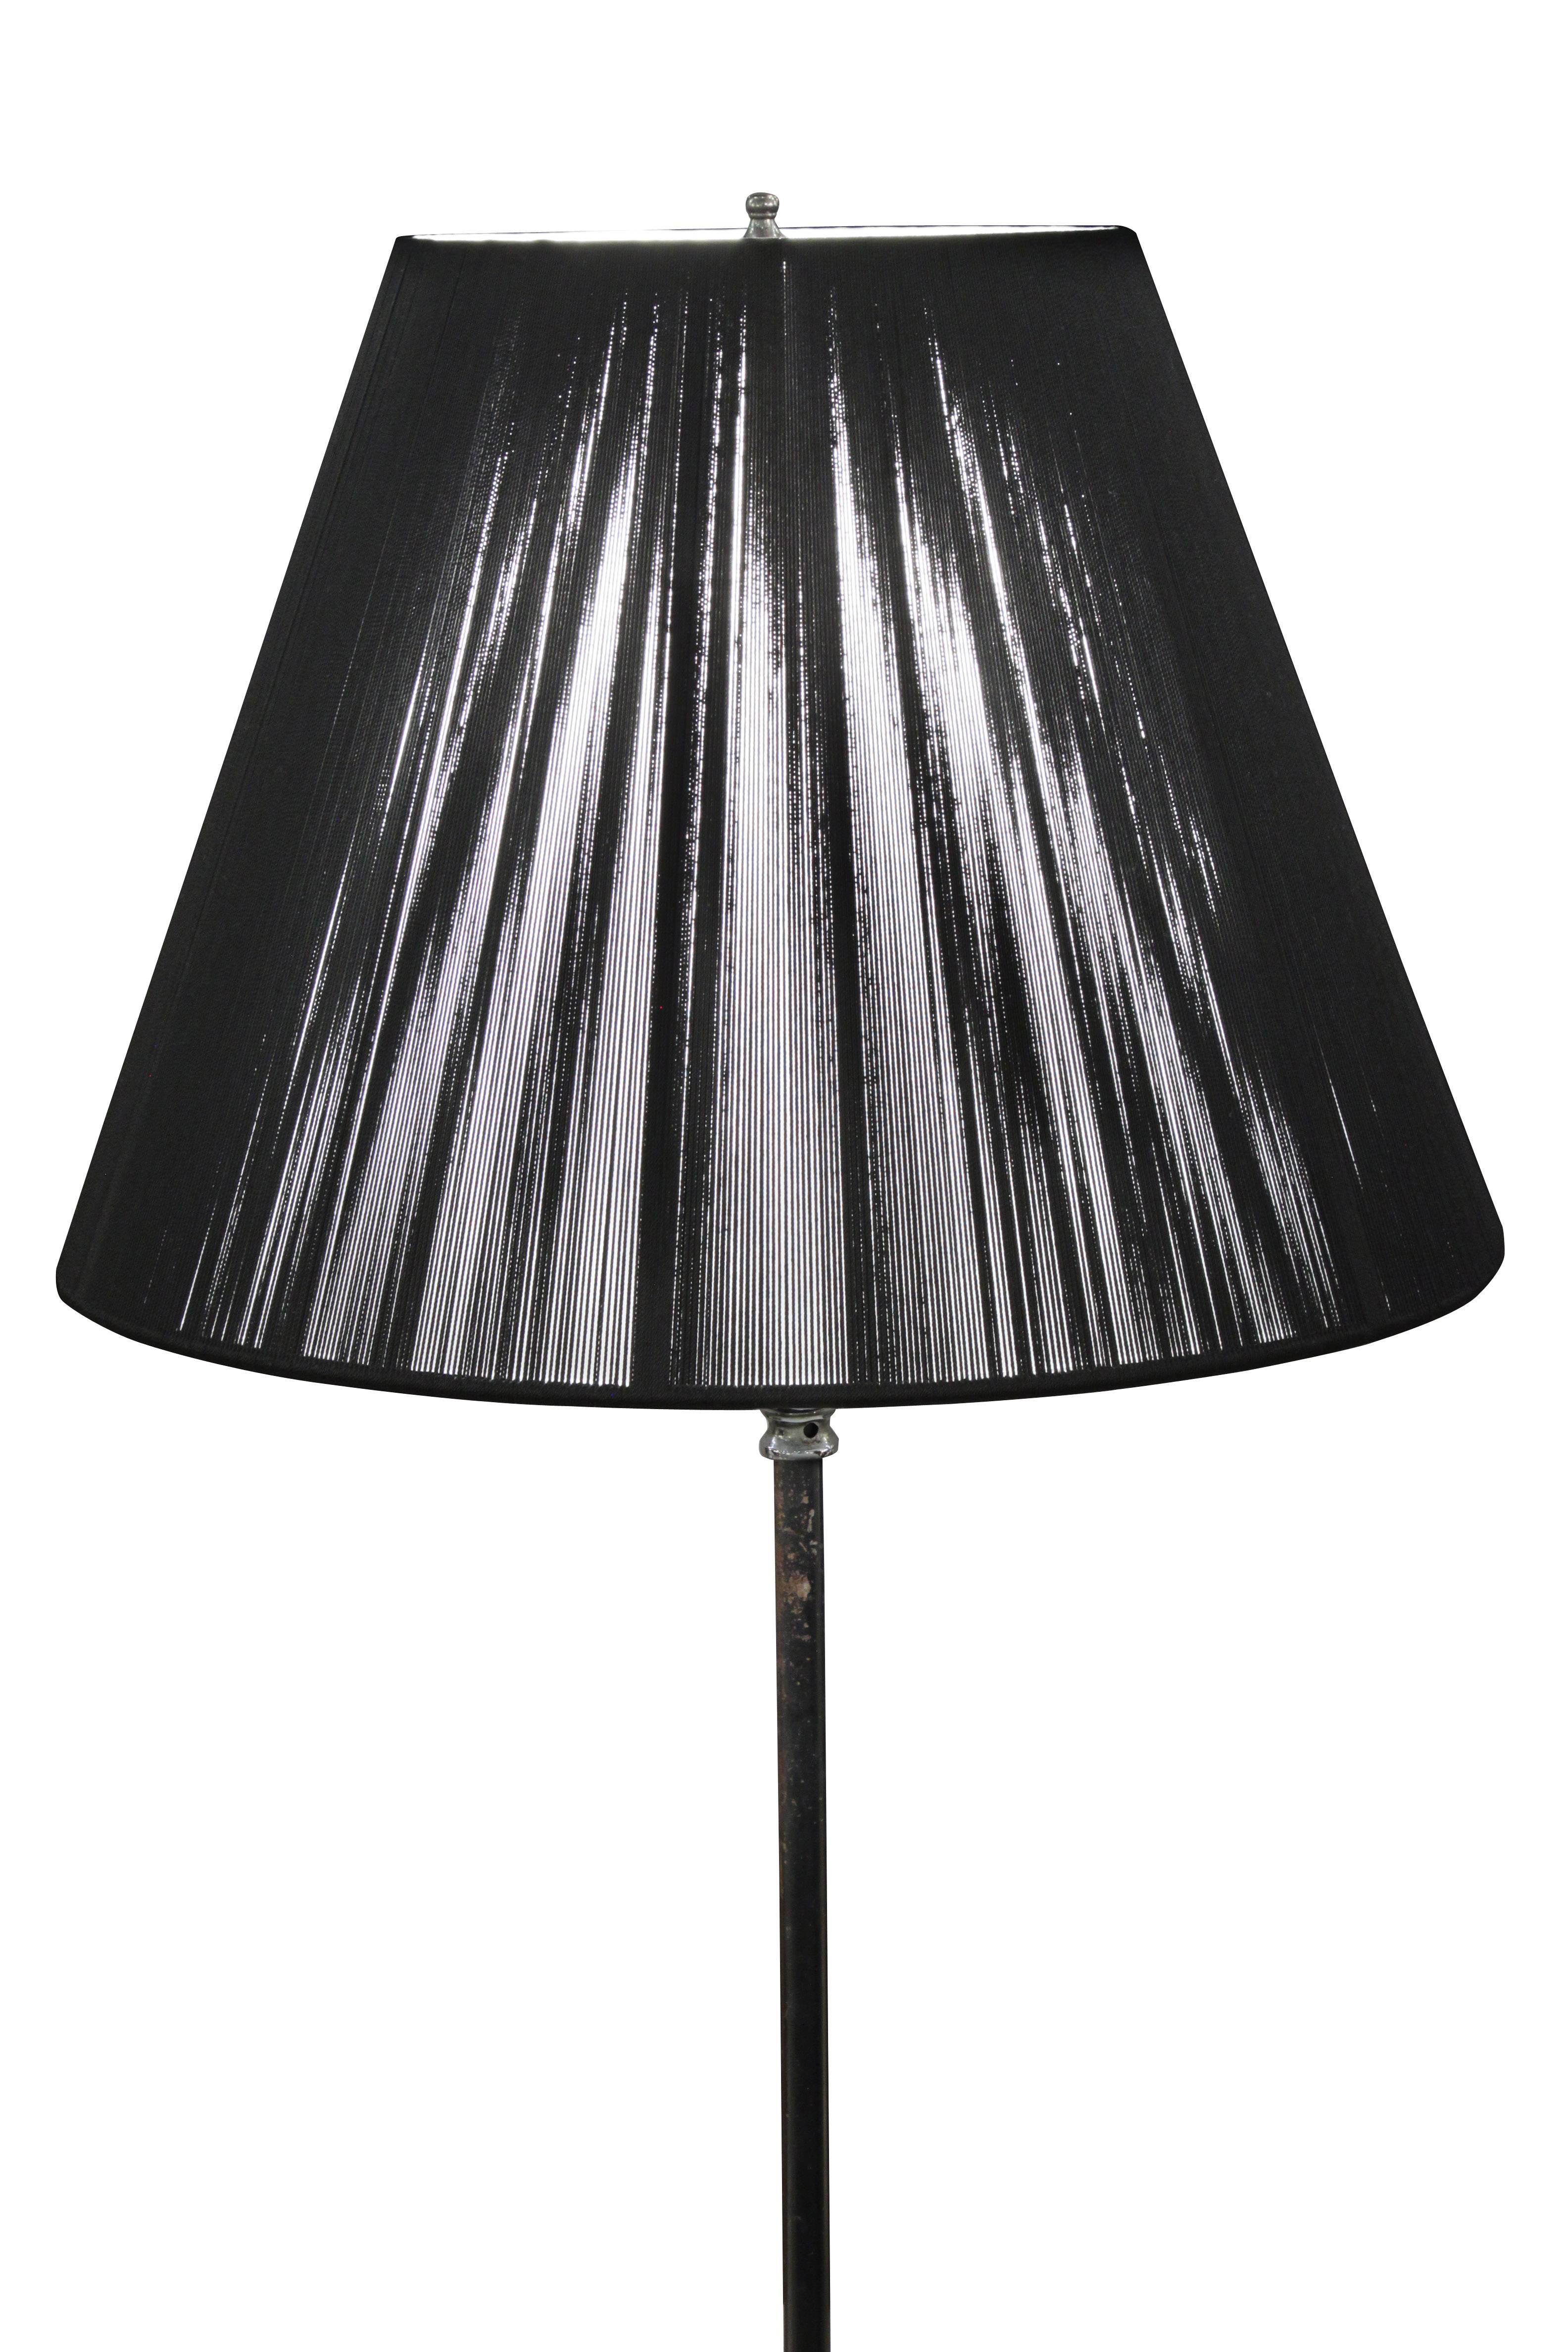 Elegant three-leg black metal floor lamp with incised nickel accents, France, 1950s.